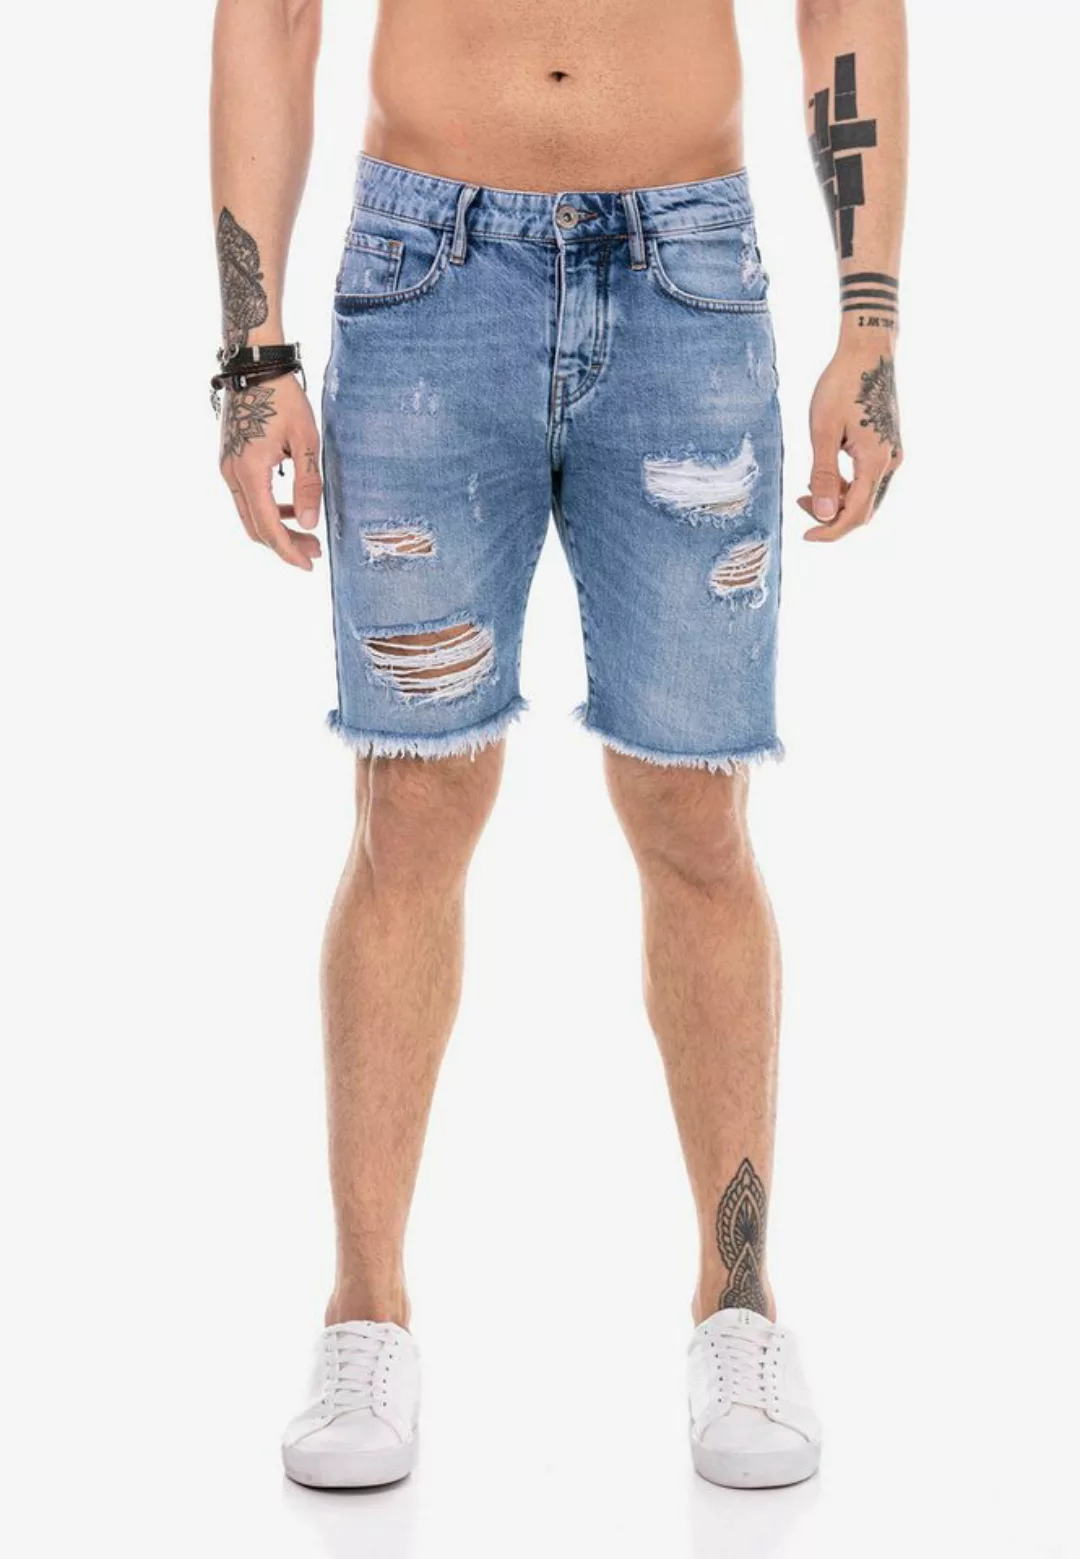 Return Jeansshorts Red Bridge Herren Jeans Shorts Kurze Hose Denim Capri Di günstig online kaufen